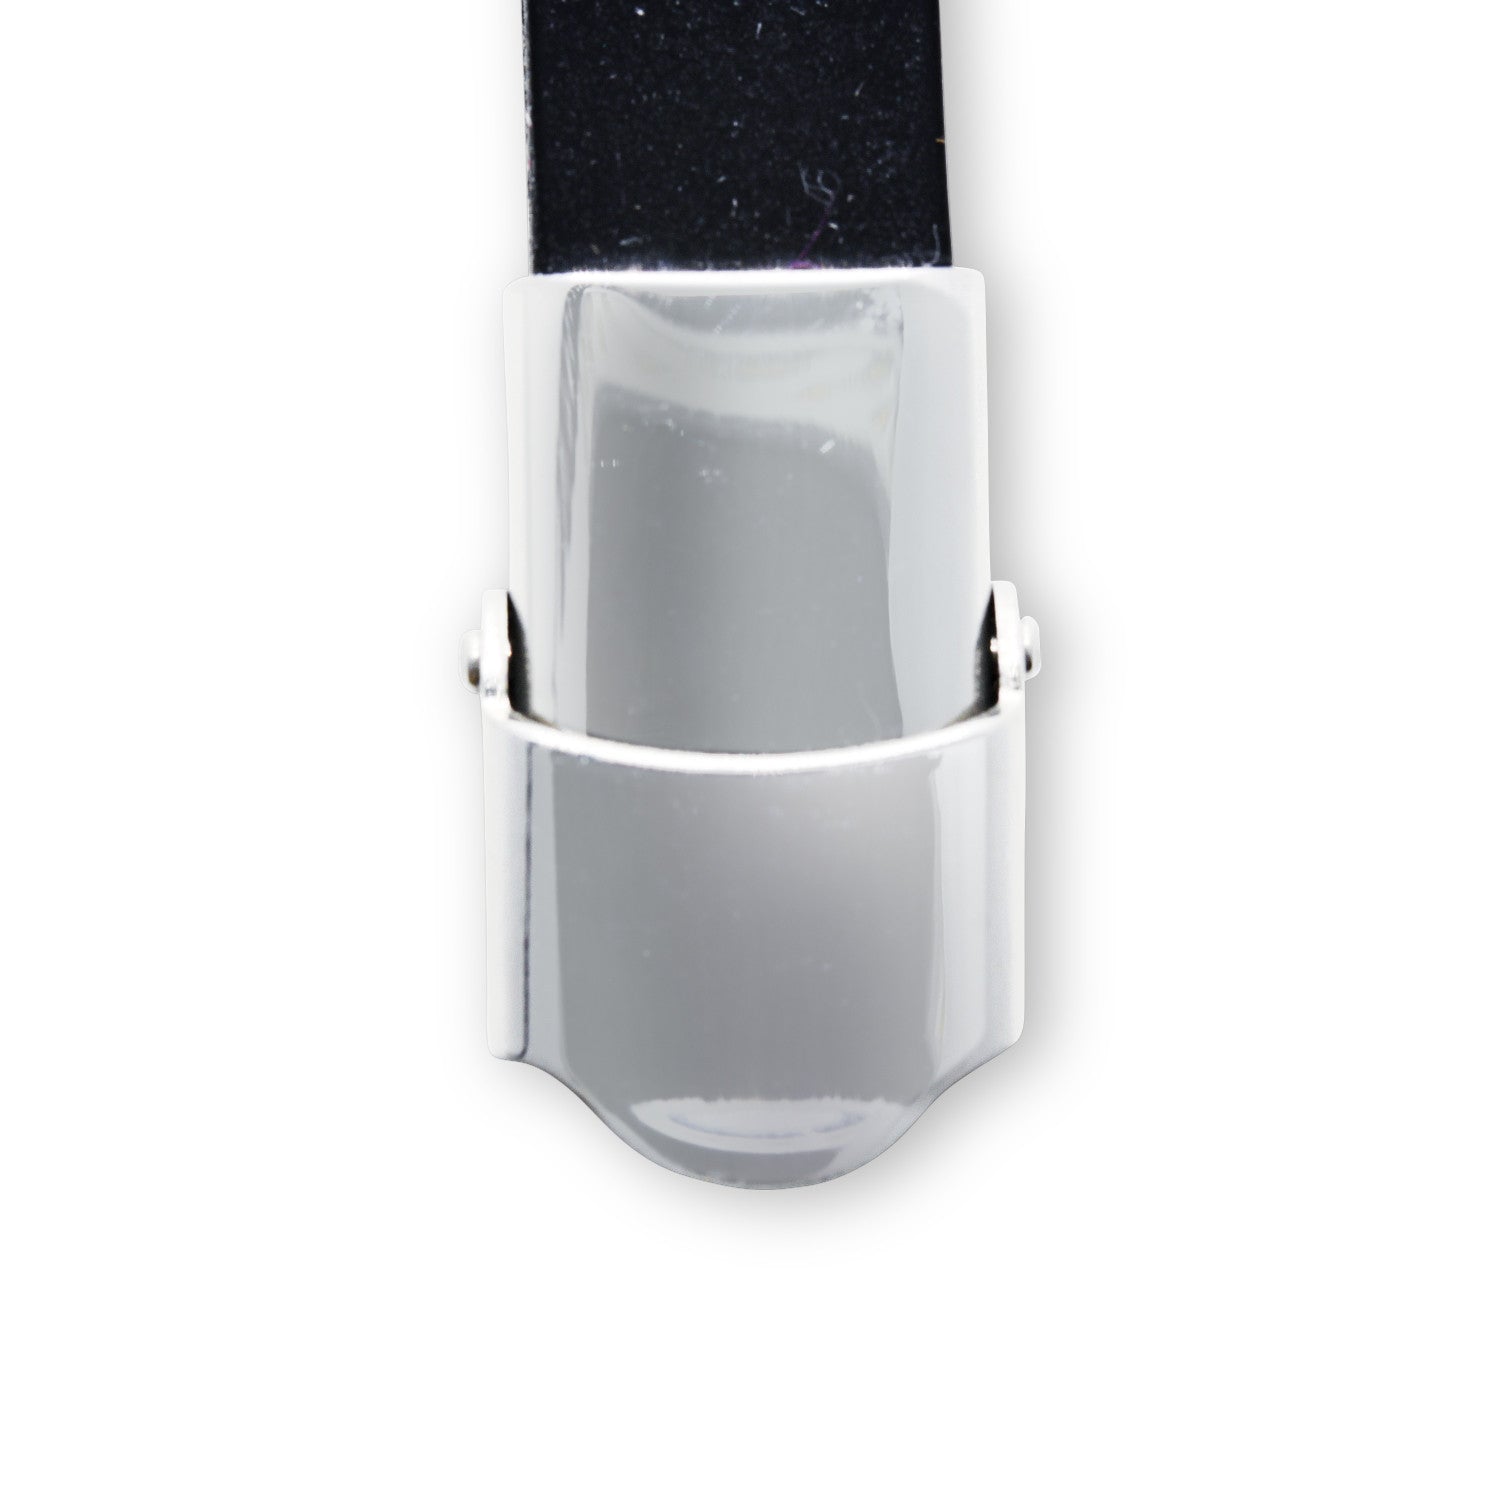 Stainless Steel Black Two Tone Design Rubber Bracelet